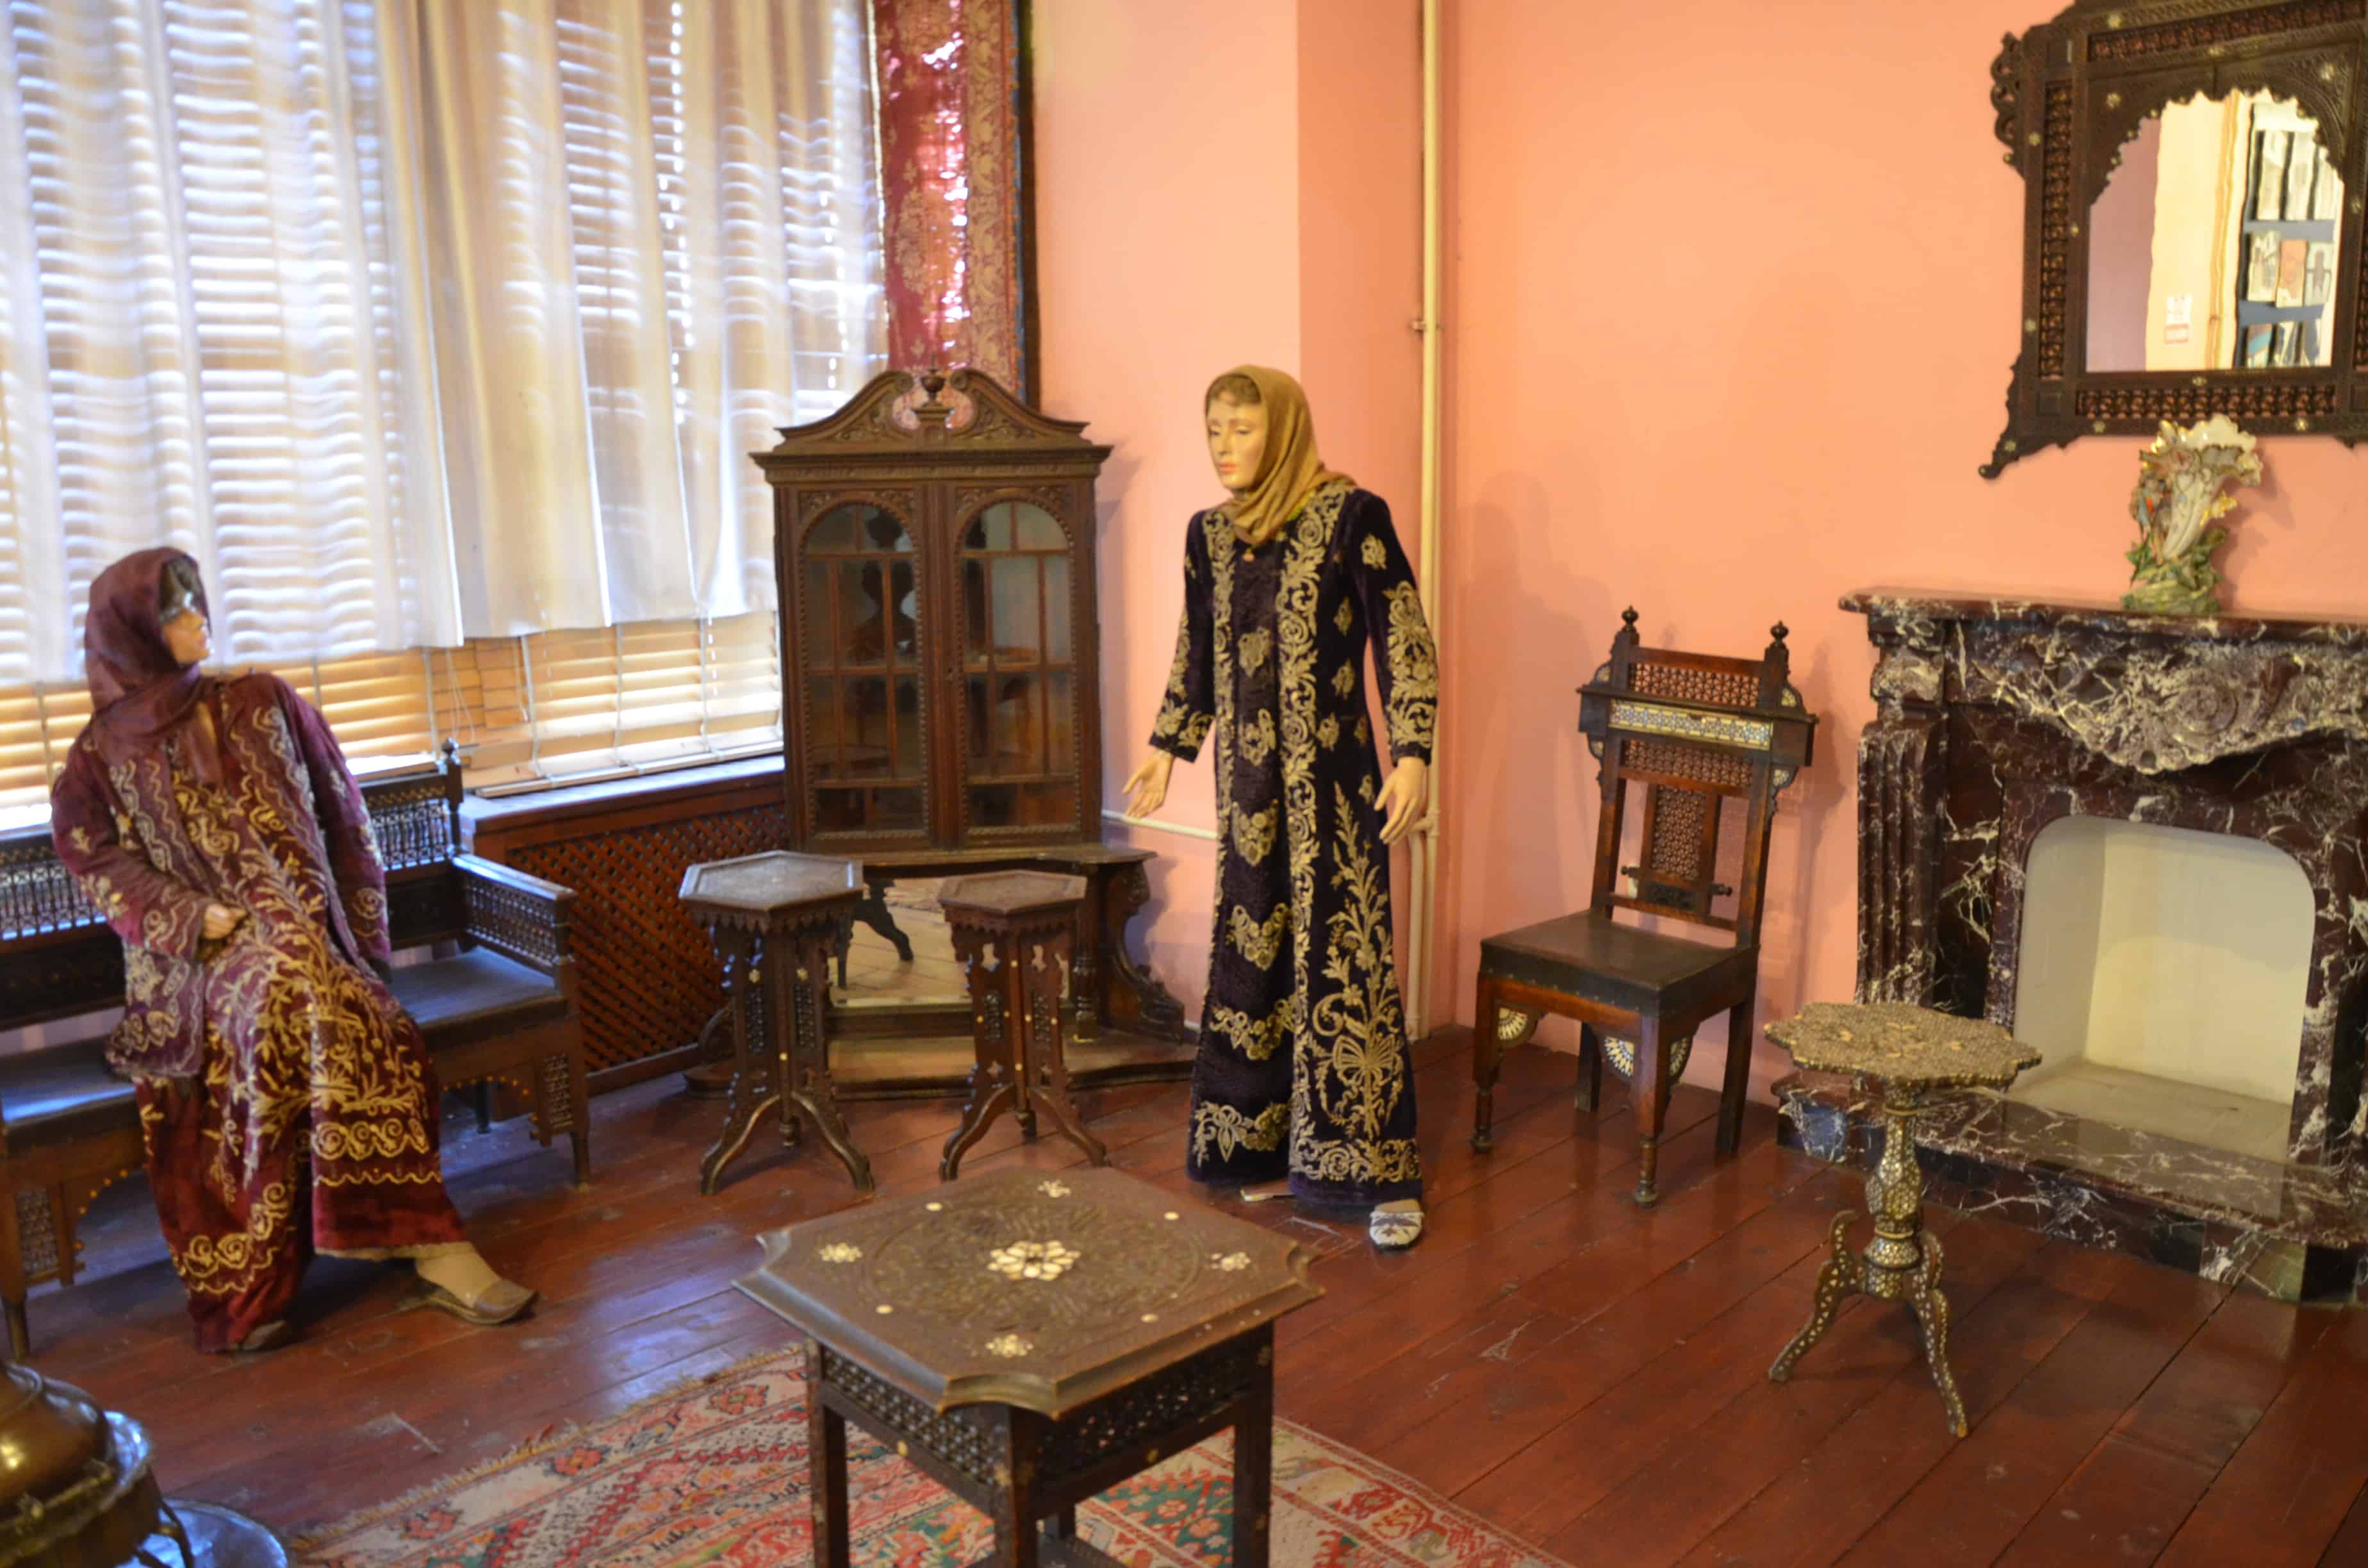 Ottoman home at the Izmir Ethnography Museum in Izmir, Turkey